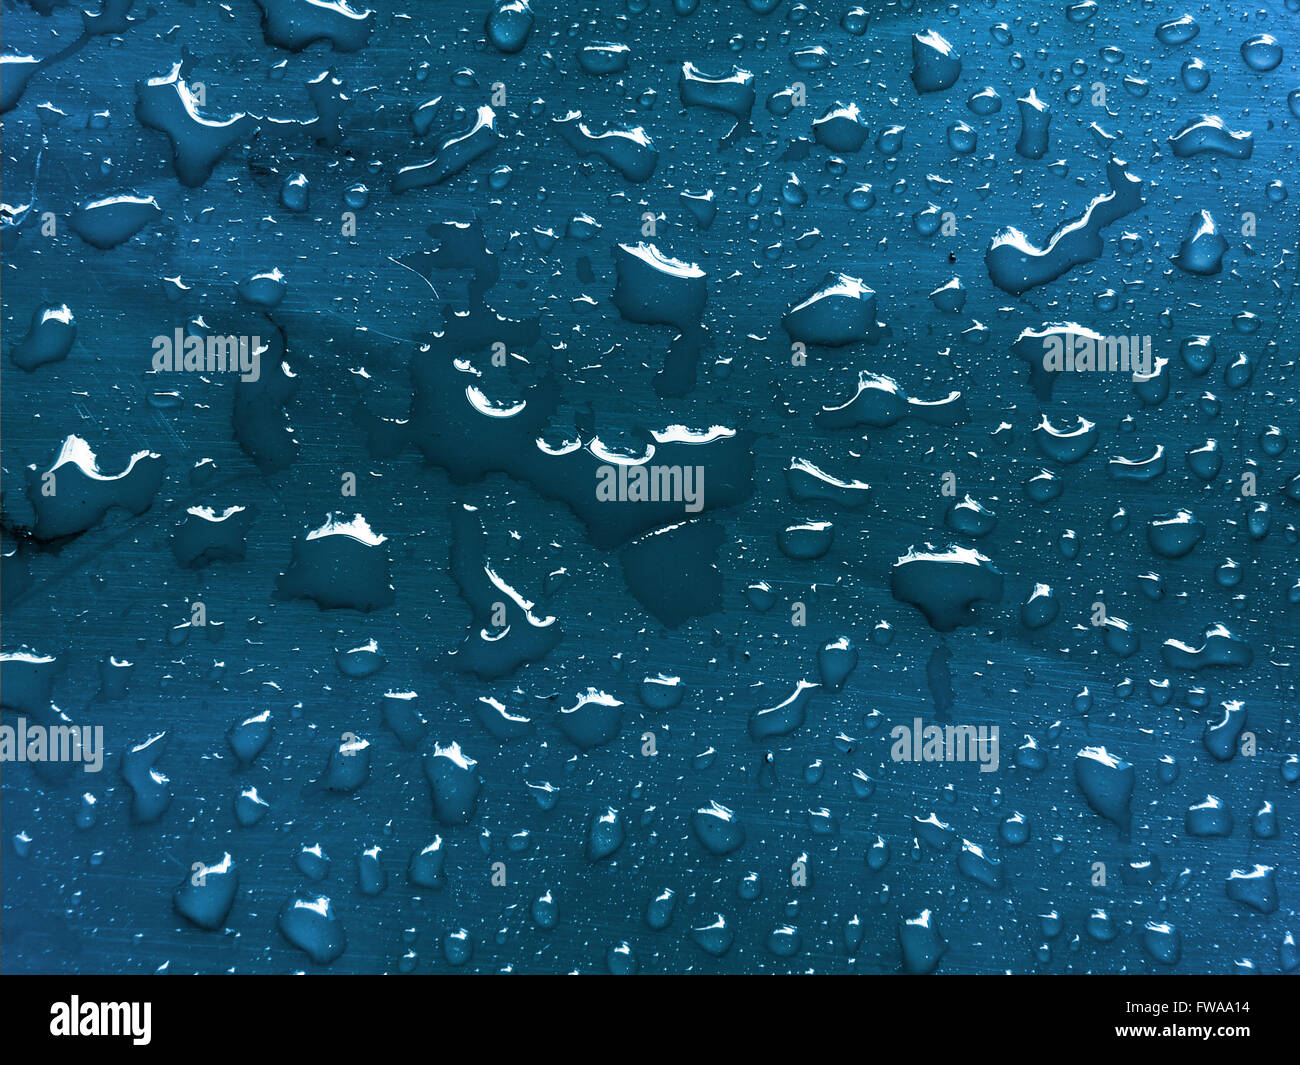 water drops on metallic surface Stock Photo